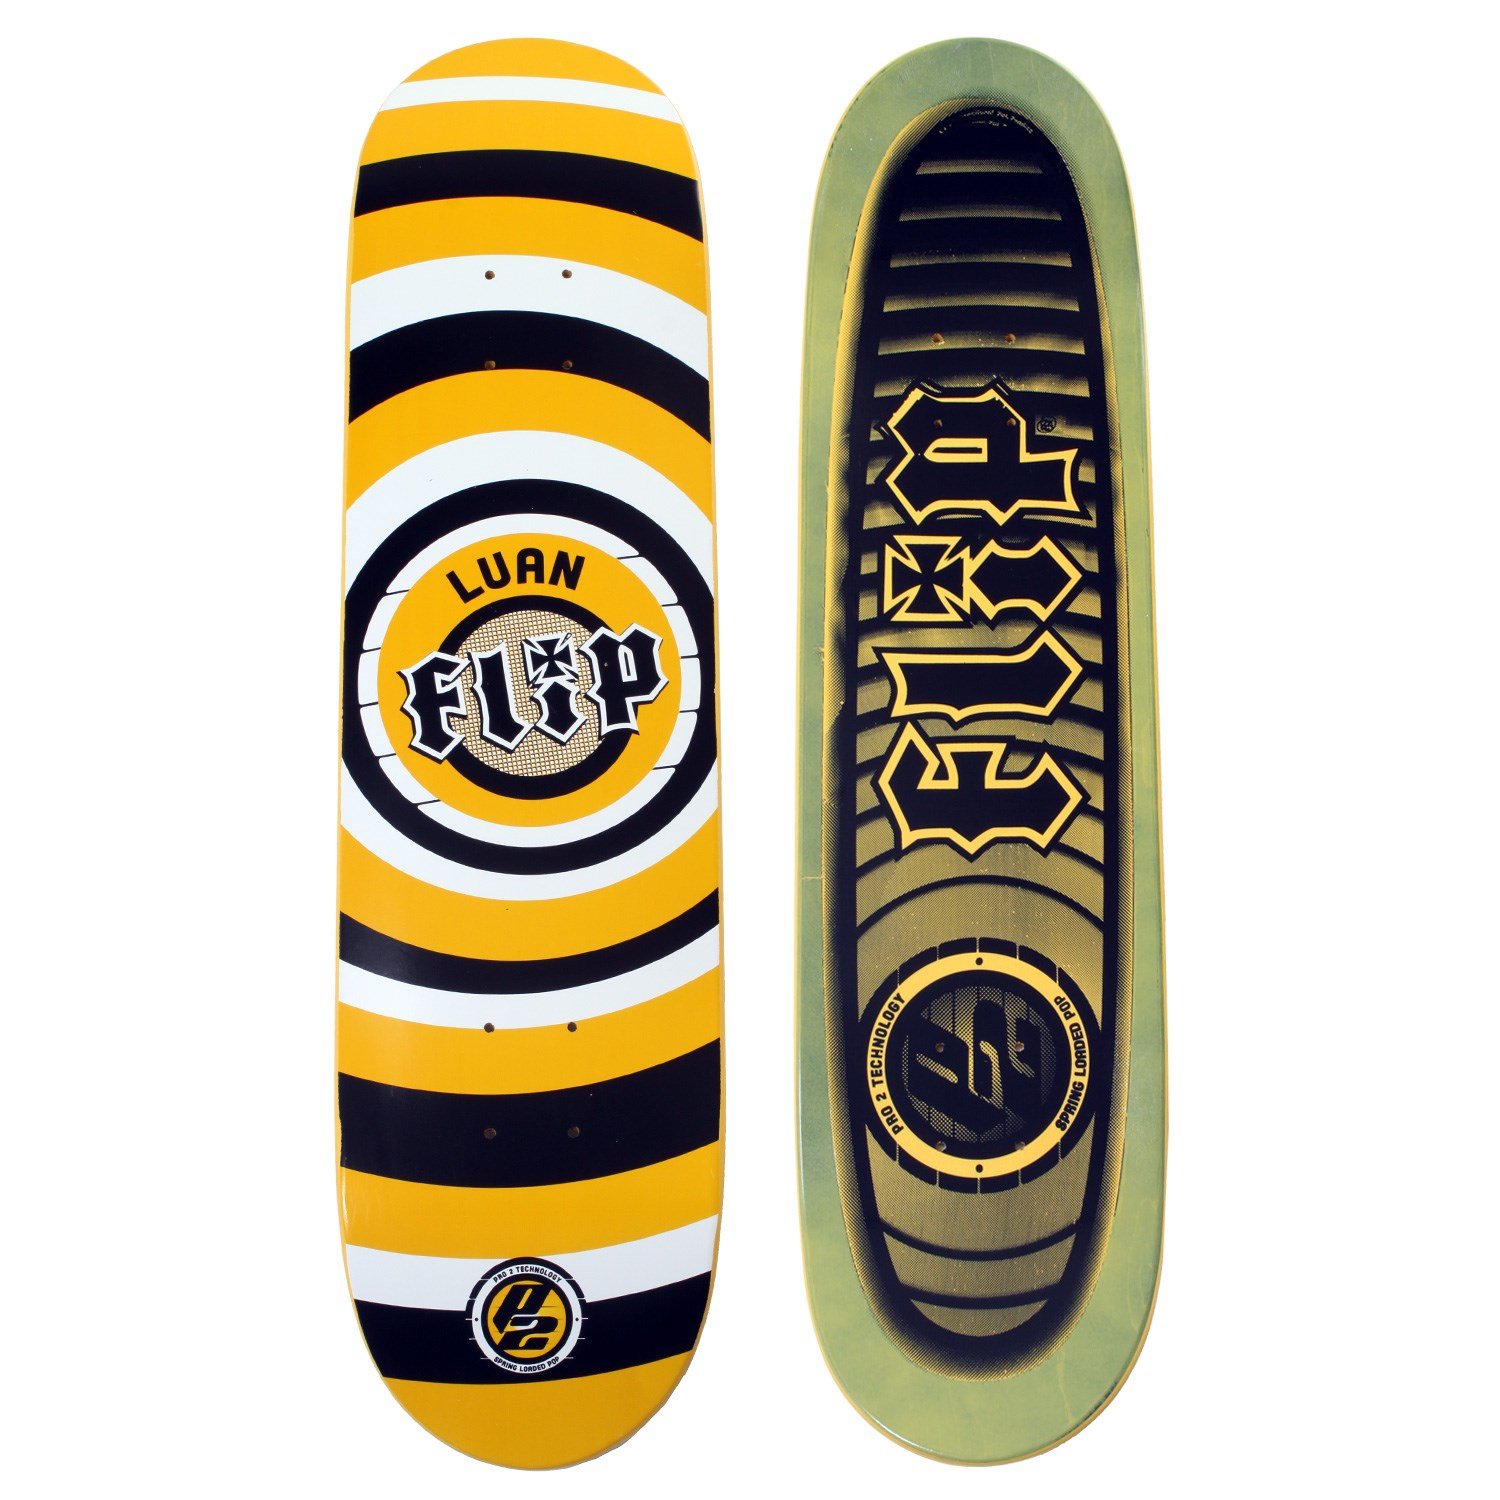 Flip Luan Oliveira P2 Logo Skateboard Deck evo